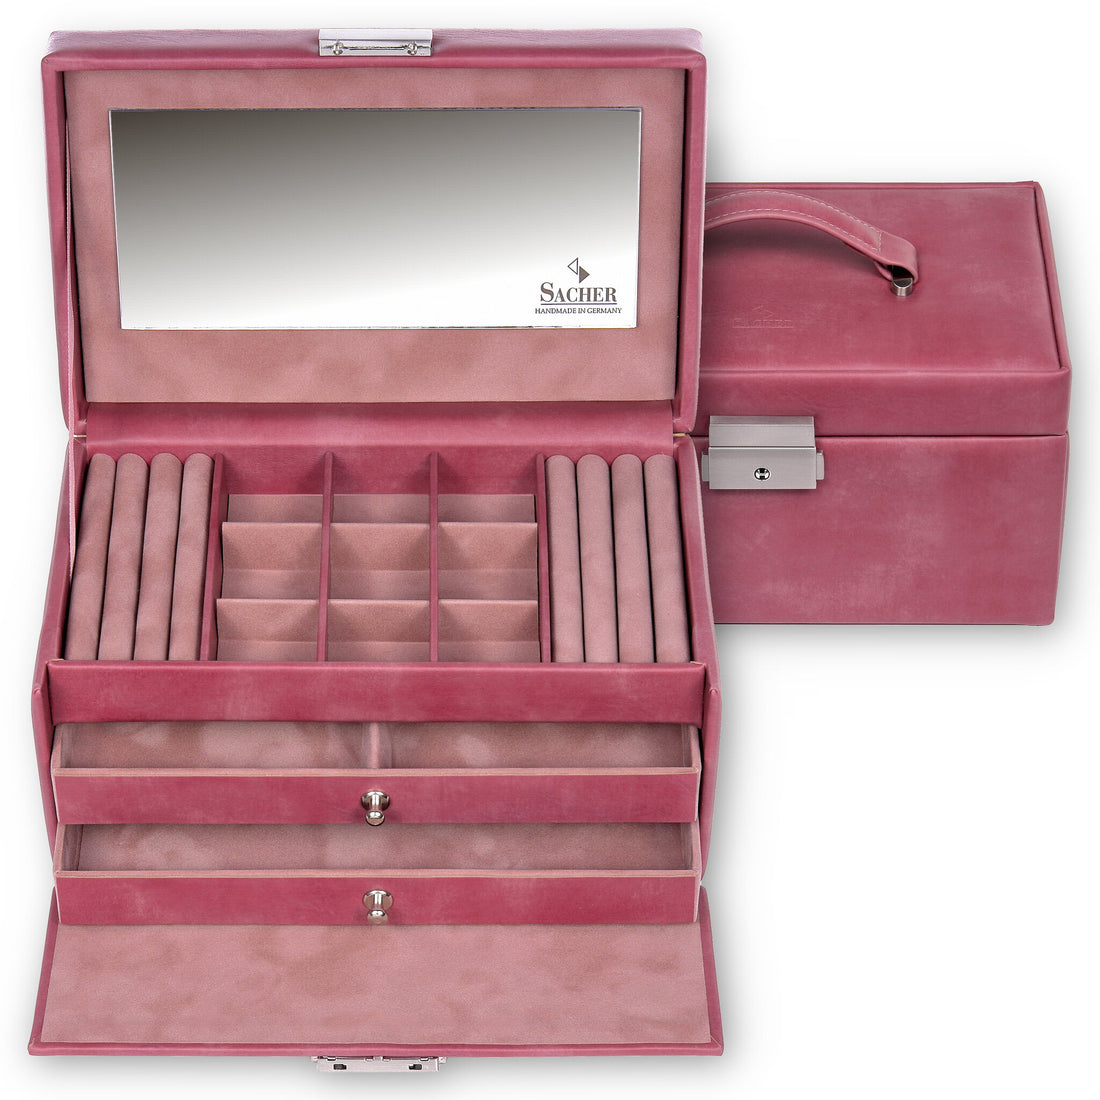 Schmuckkasten Elly pastello / alt rosé – Manufaktur SACHER 1846 |  Offizieller Store